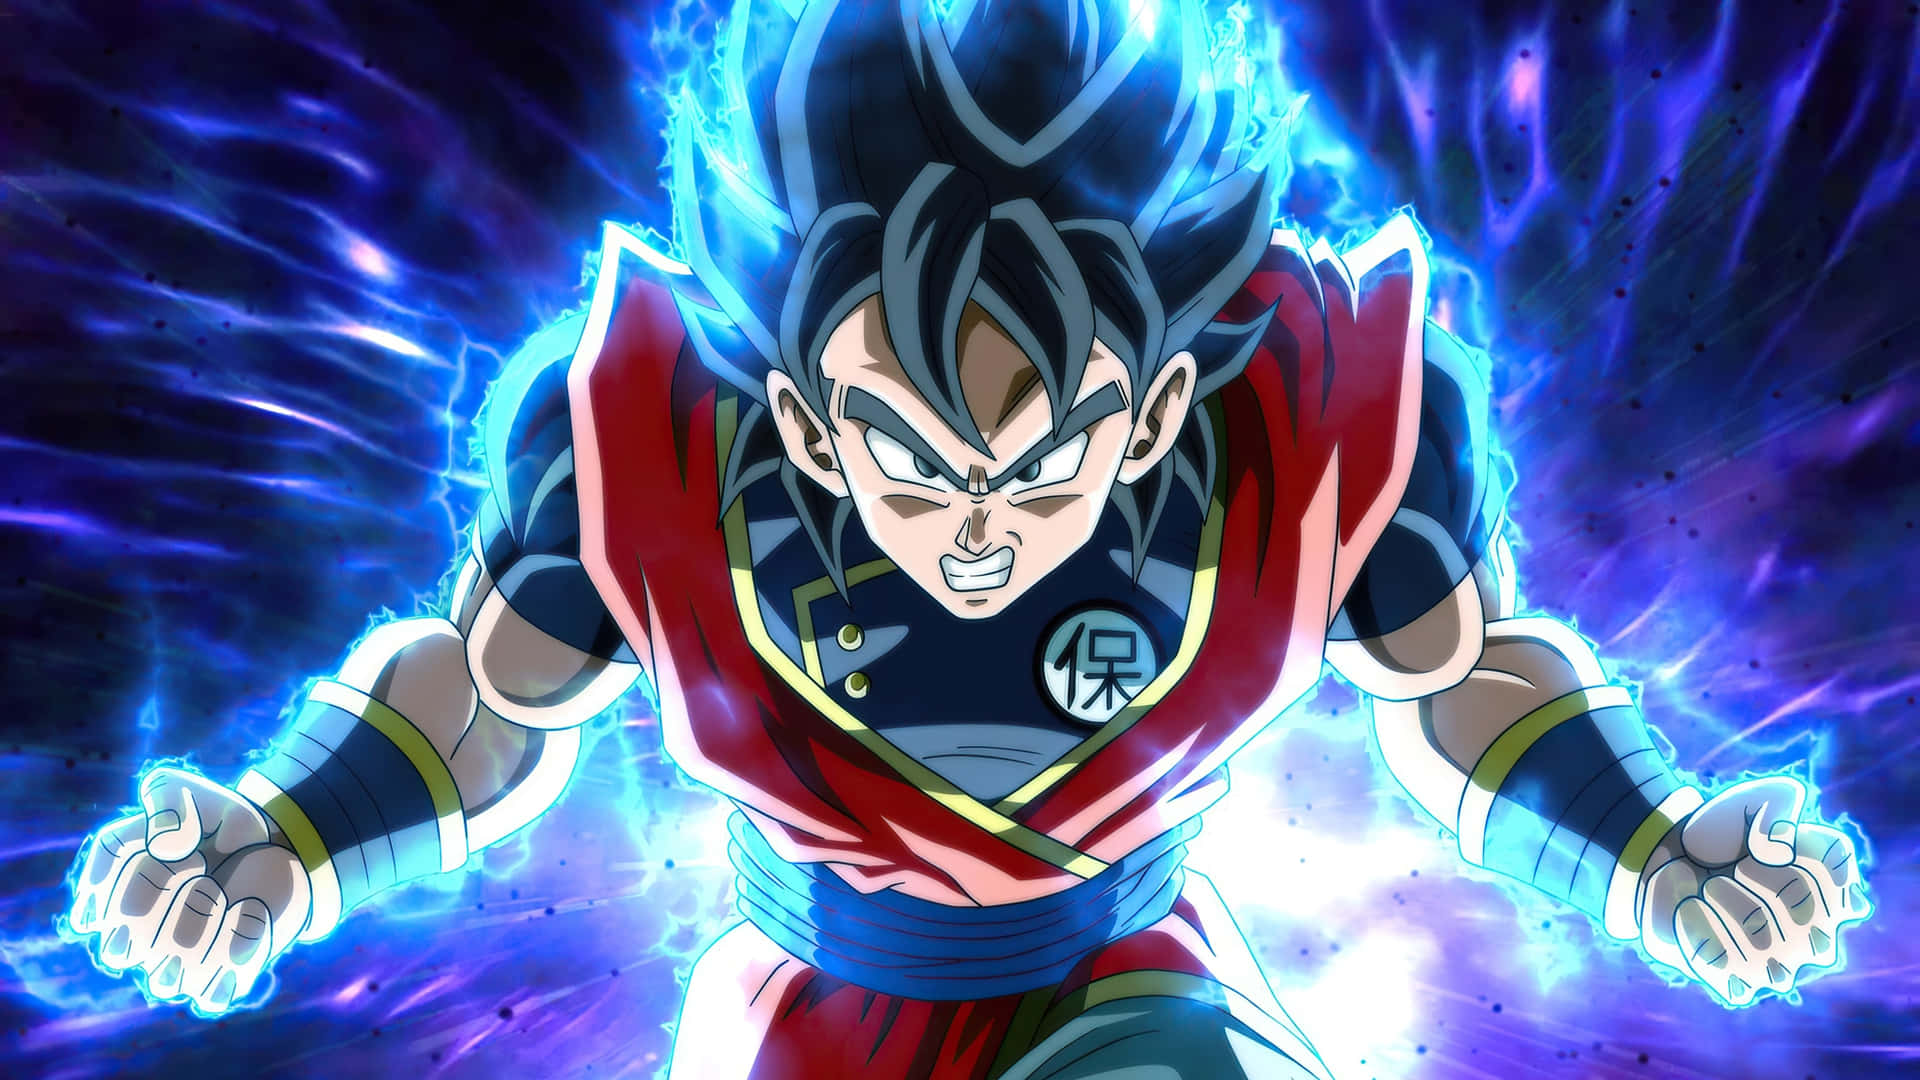 The Power of Goku - A Legendary Warrior